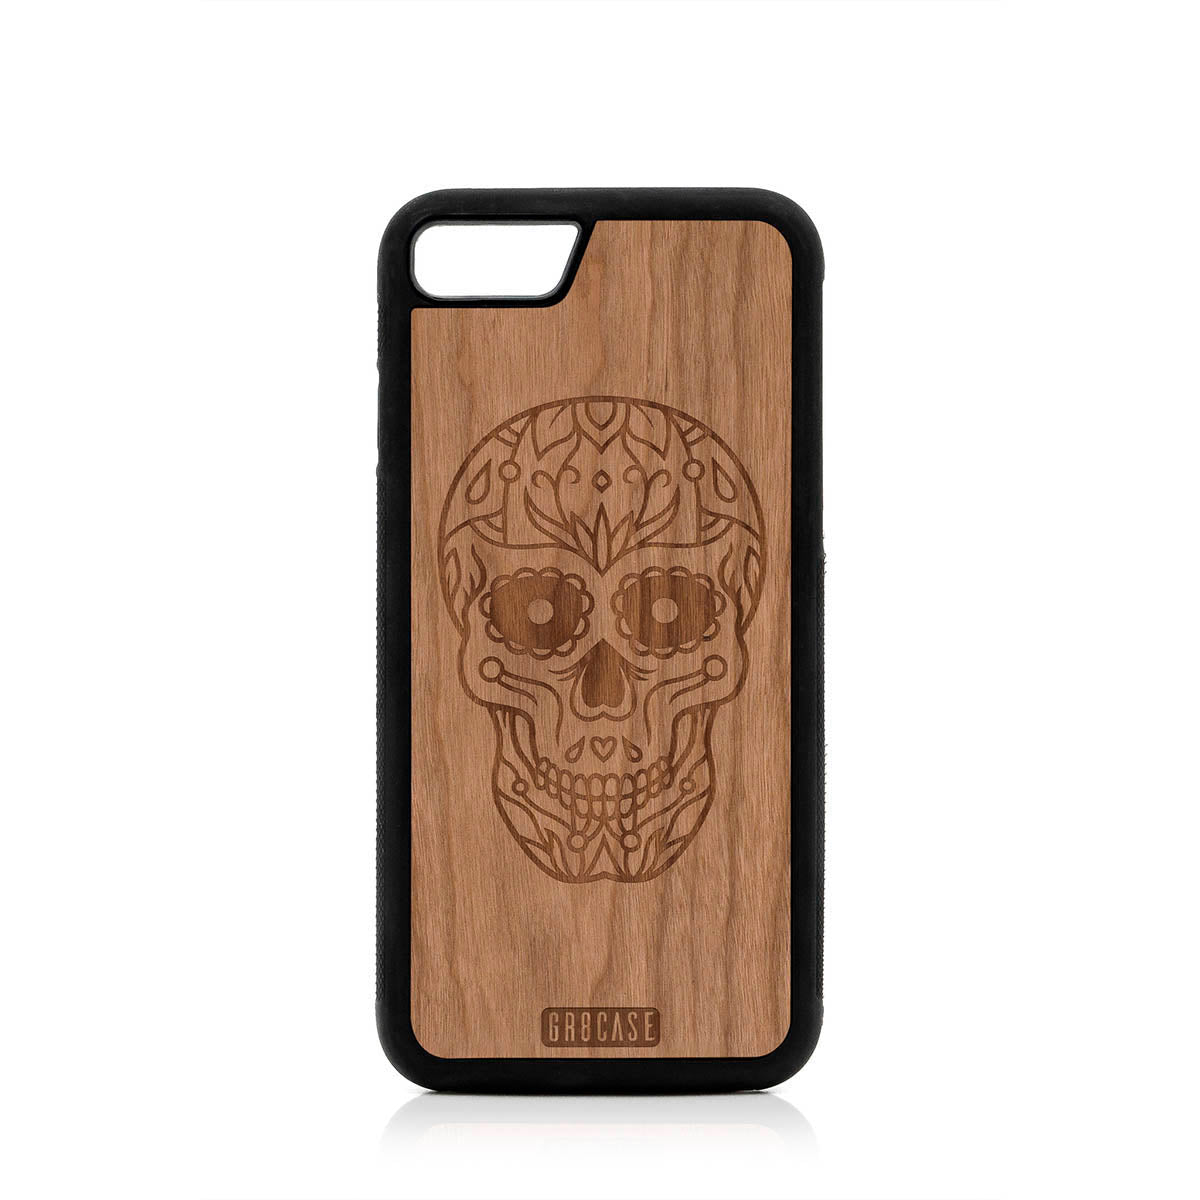 Sugar Skull Design Wood Case For iPhone 7/8 by GR8CASE